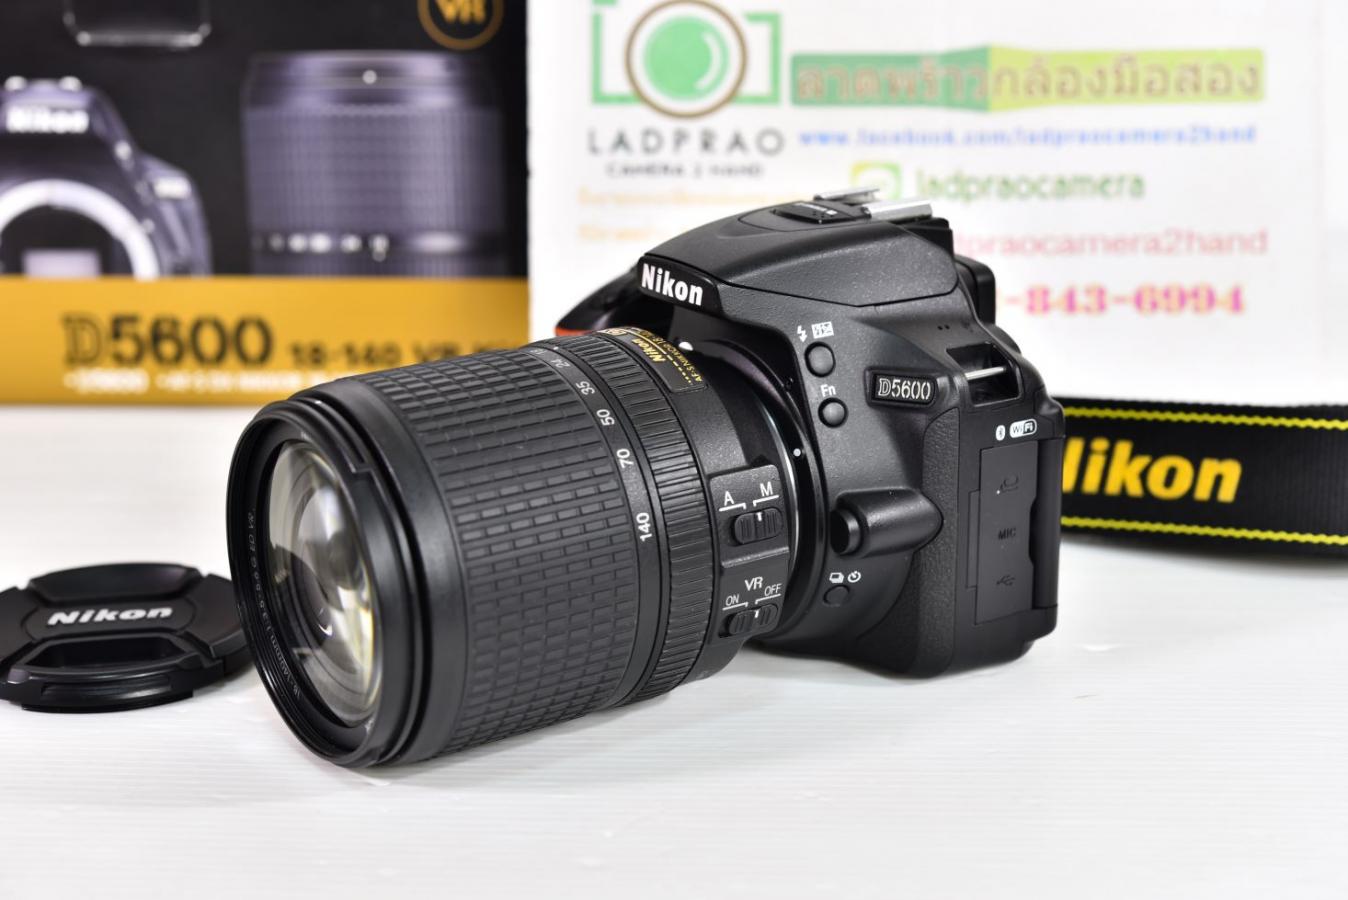 Hot!!ชุดใหญ่ Nikon D5600 Lens18-140 ชัตเตอร์ 5,179 ครั้งน้อยสุดๆ เครื่องศูนย์ไทย ของครบจบที่เดียว ปกติดีทุกอย่าง